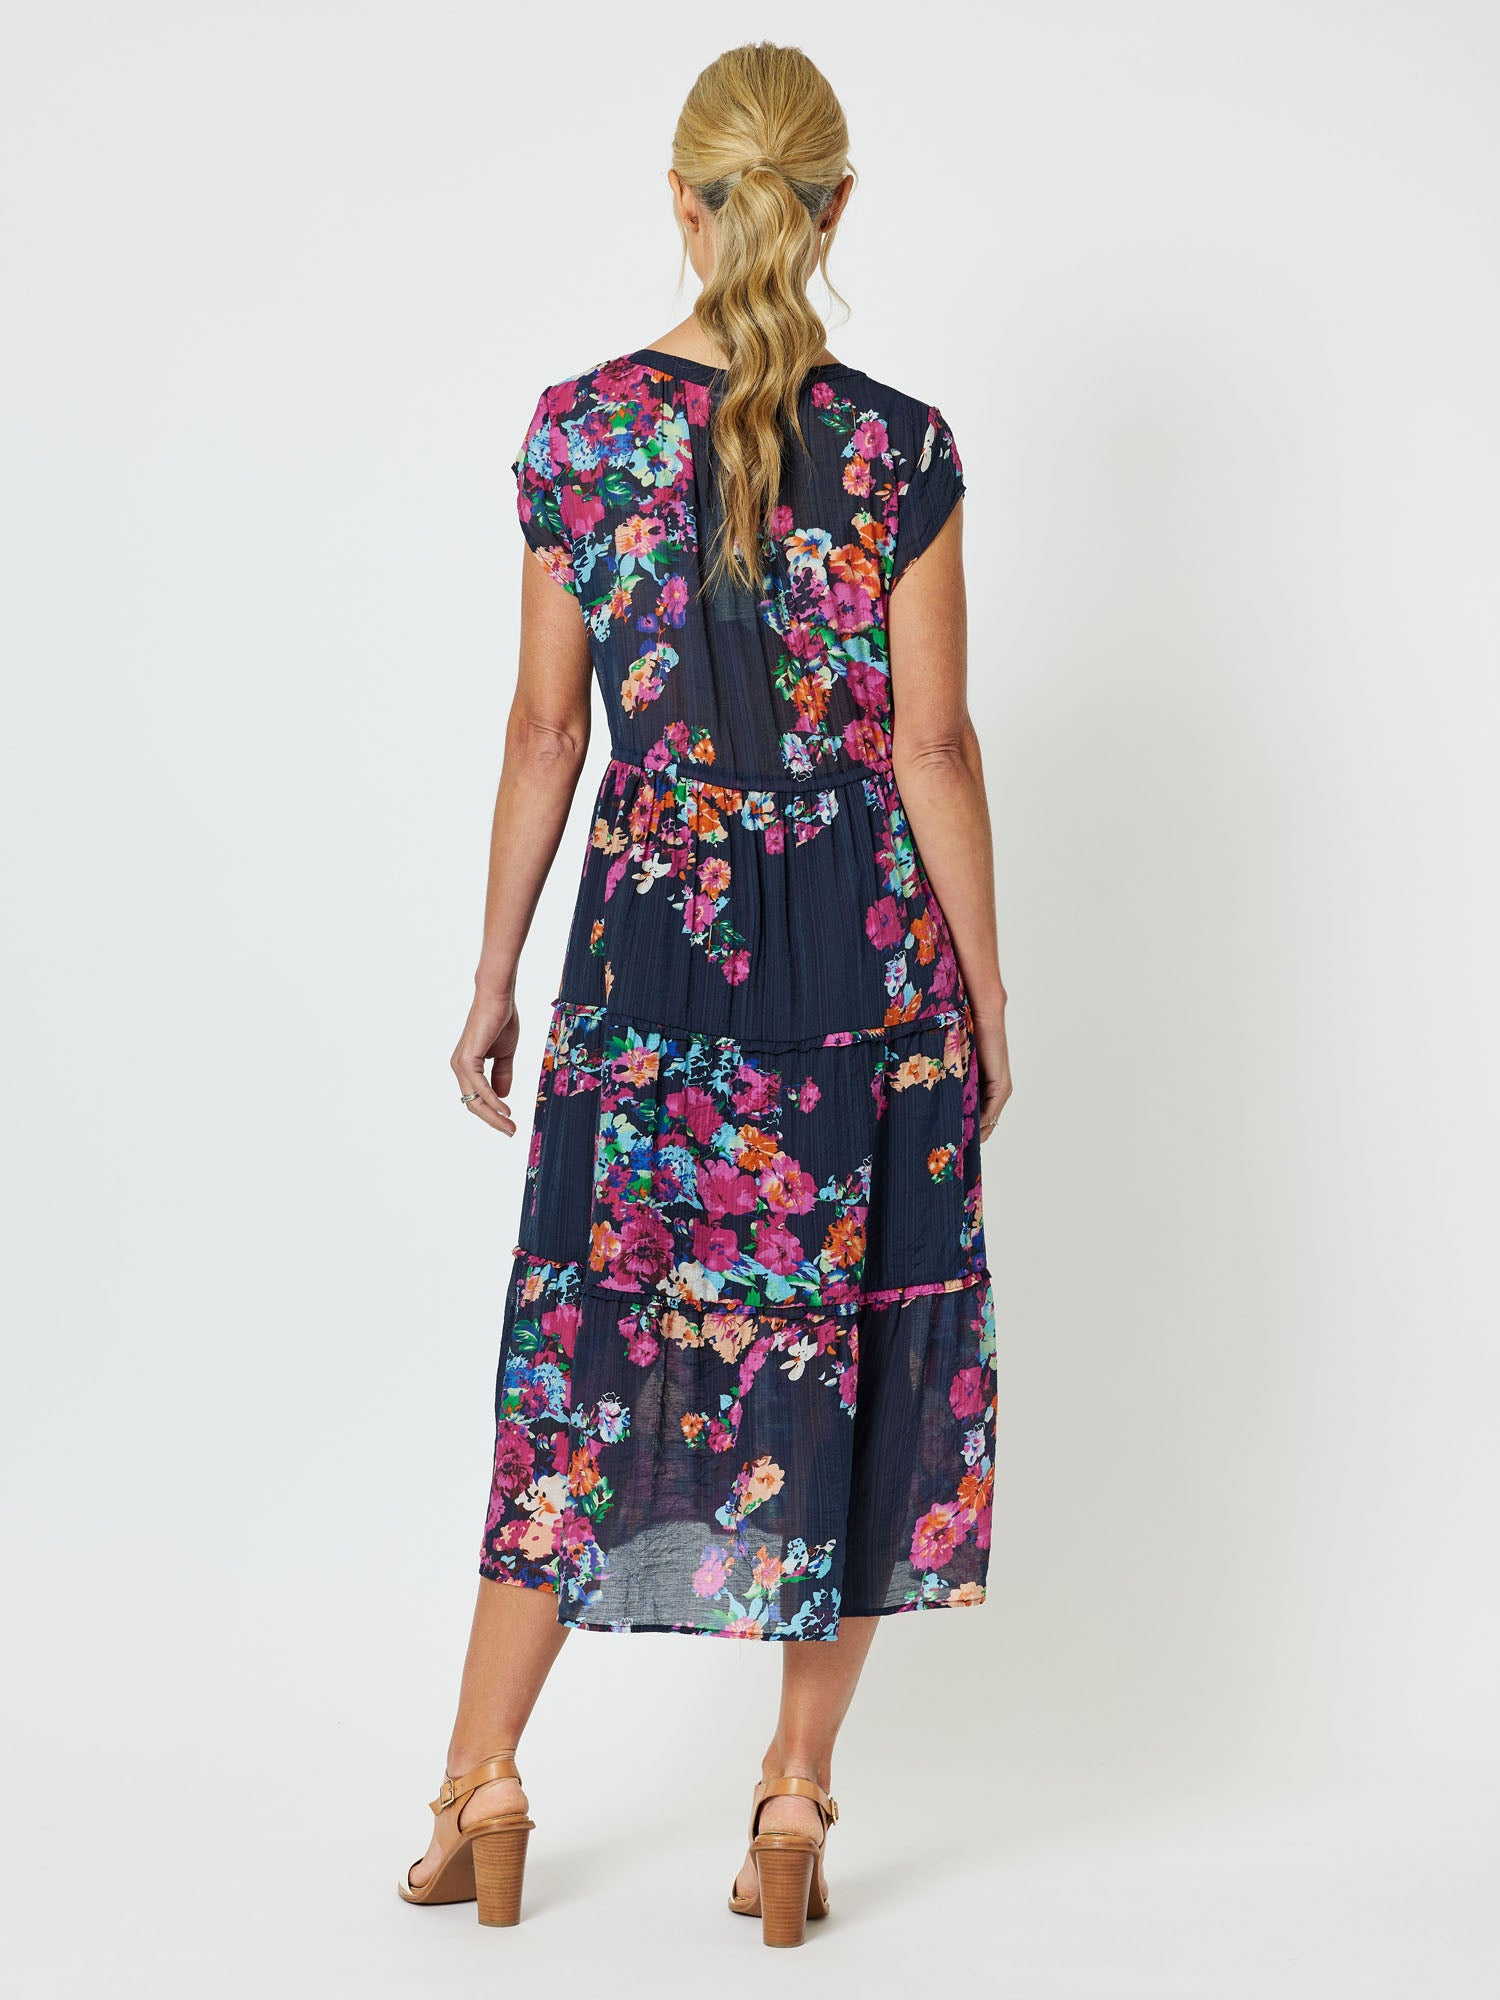 Botanical Print Dress - Multi